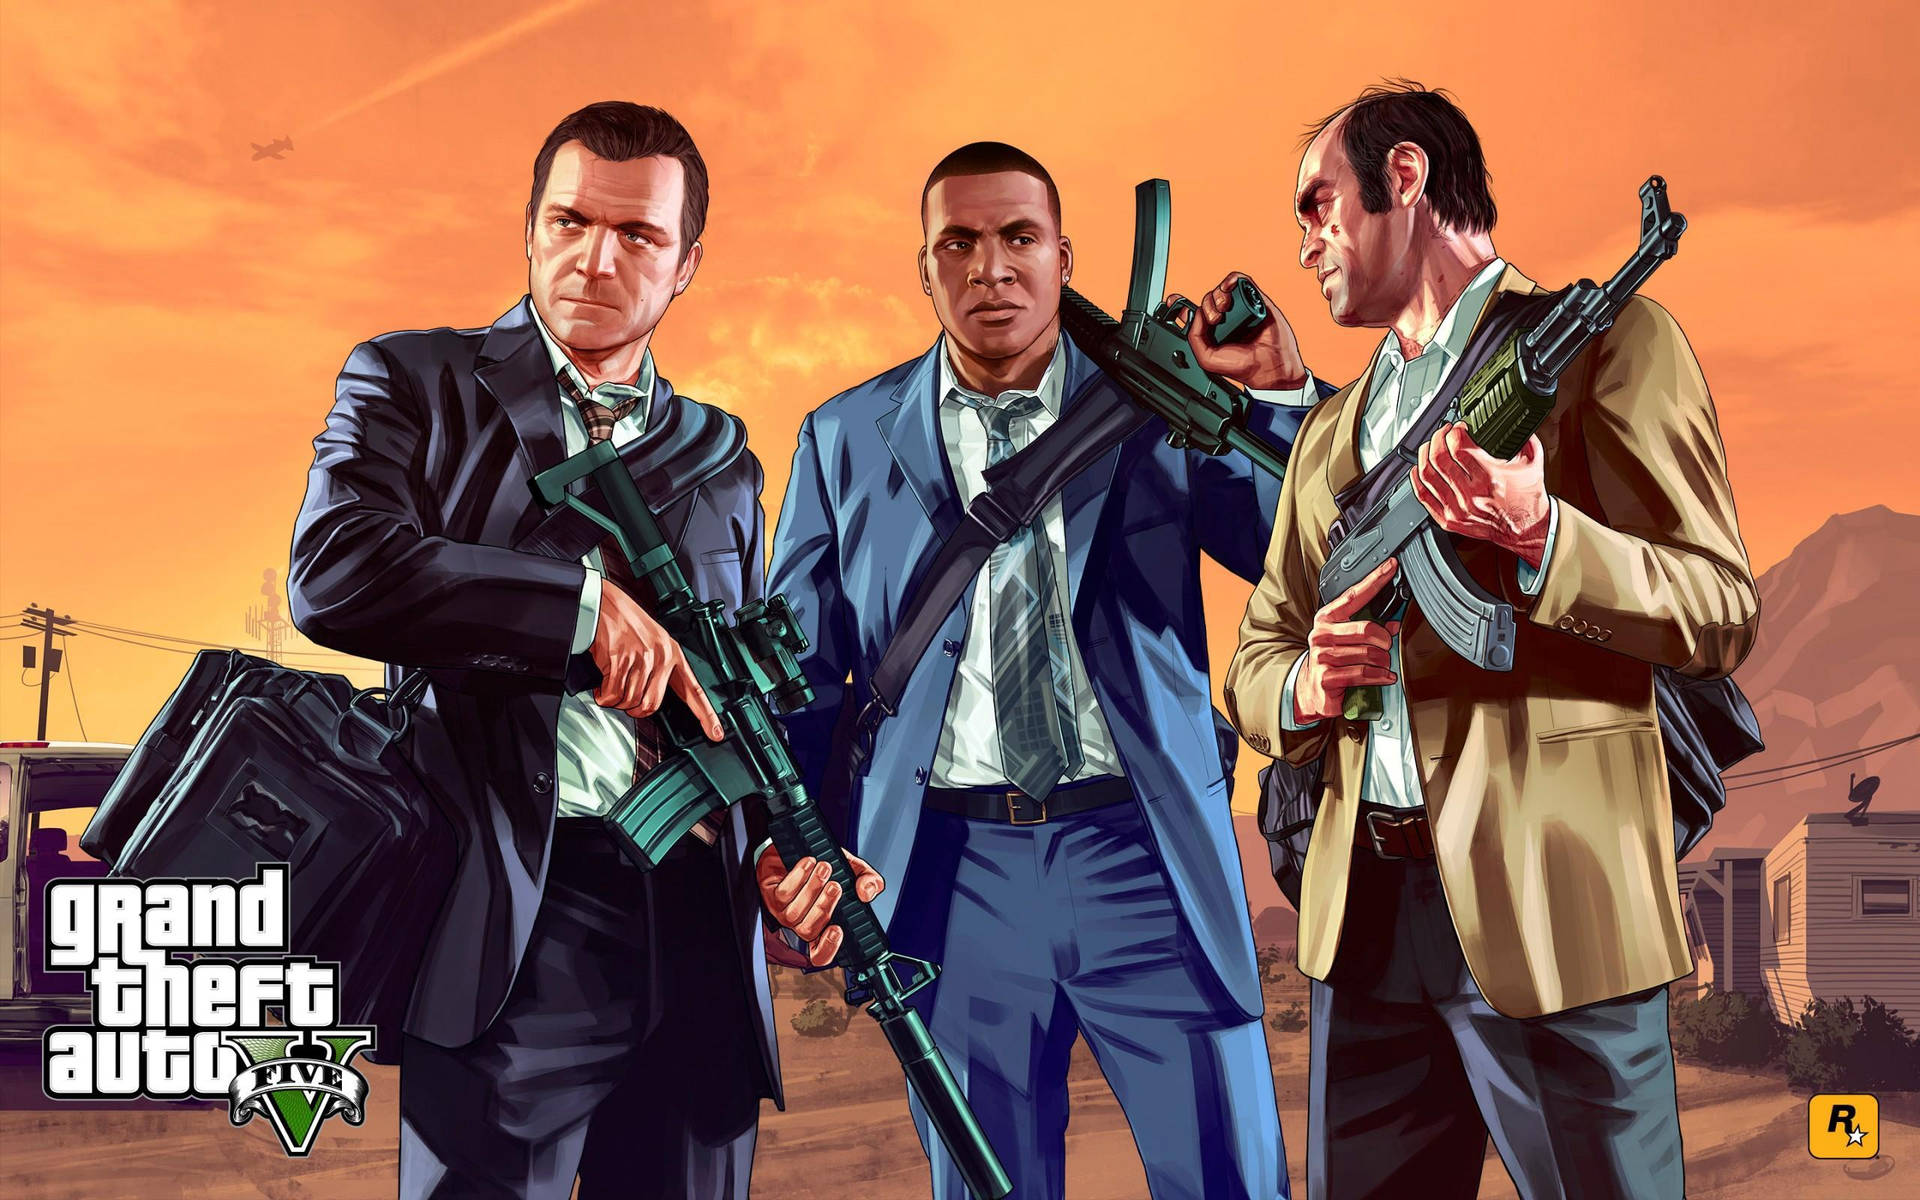 Grand Theft Auto V Protagonists Under Orange Skies